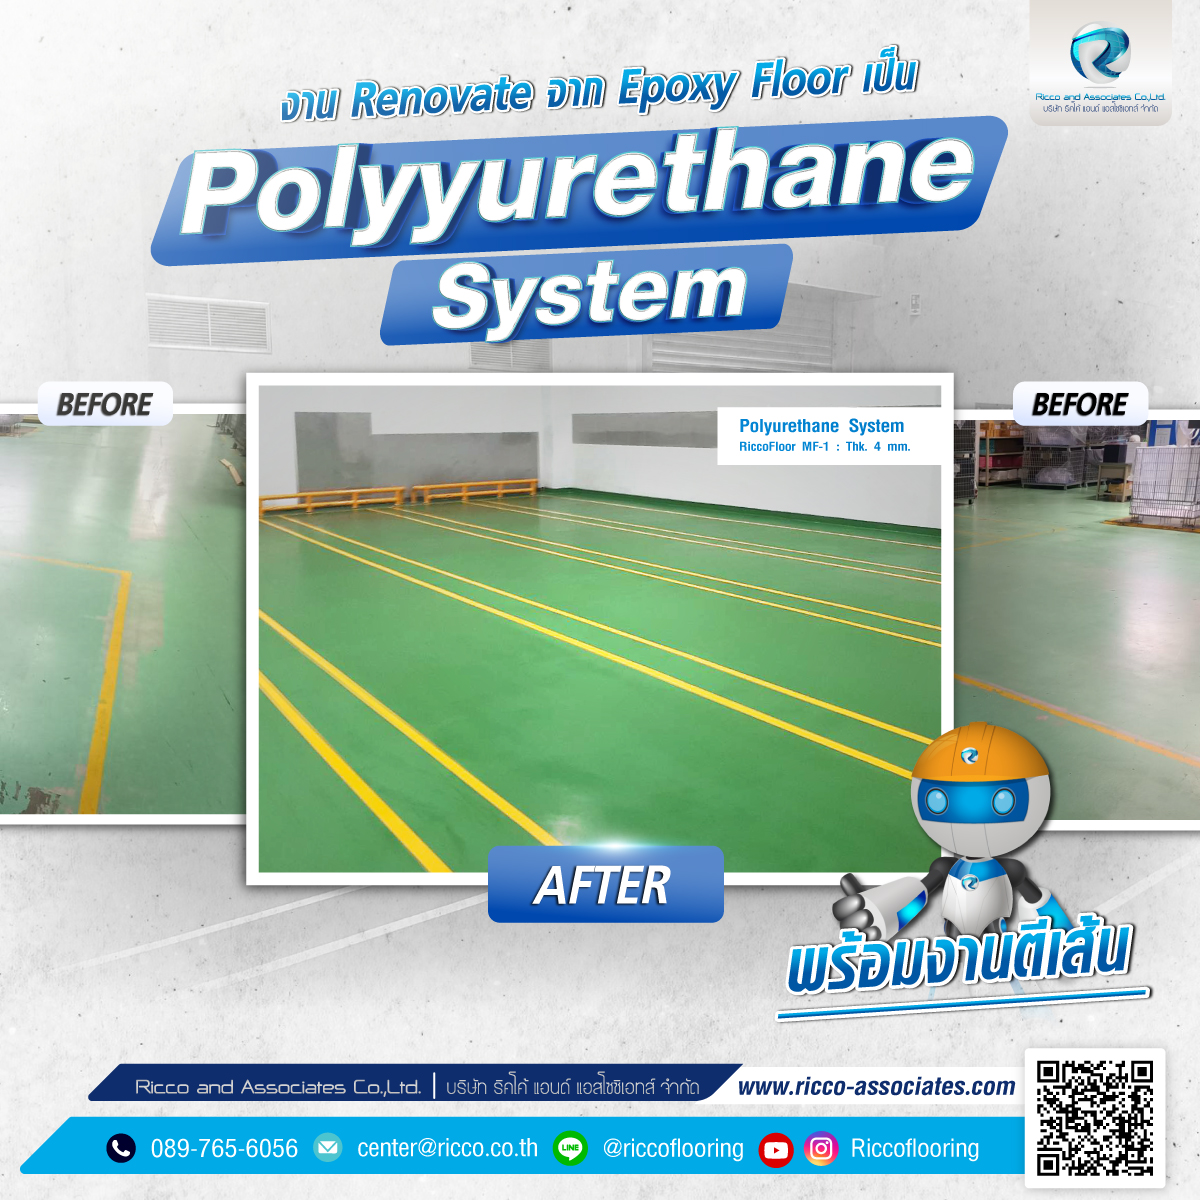 Before & After งาน Renovate จาก Epoxy Floor เป็น Polyurethane System